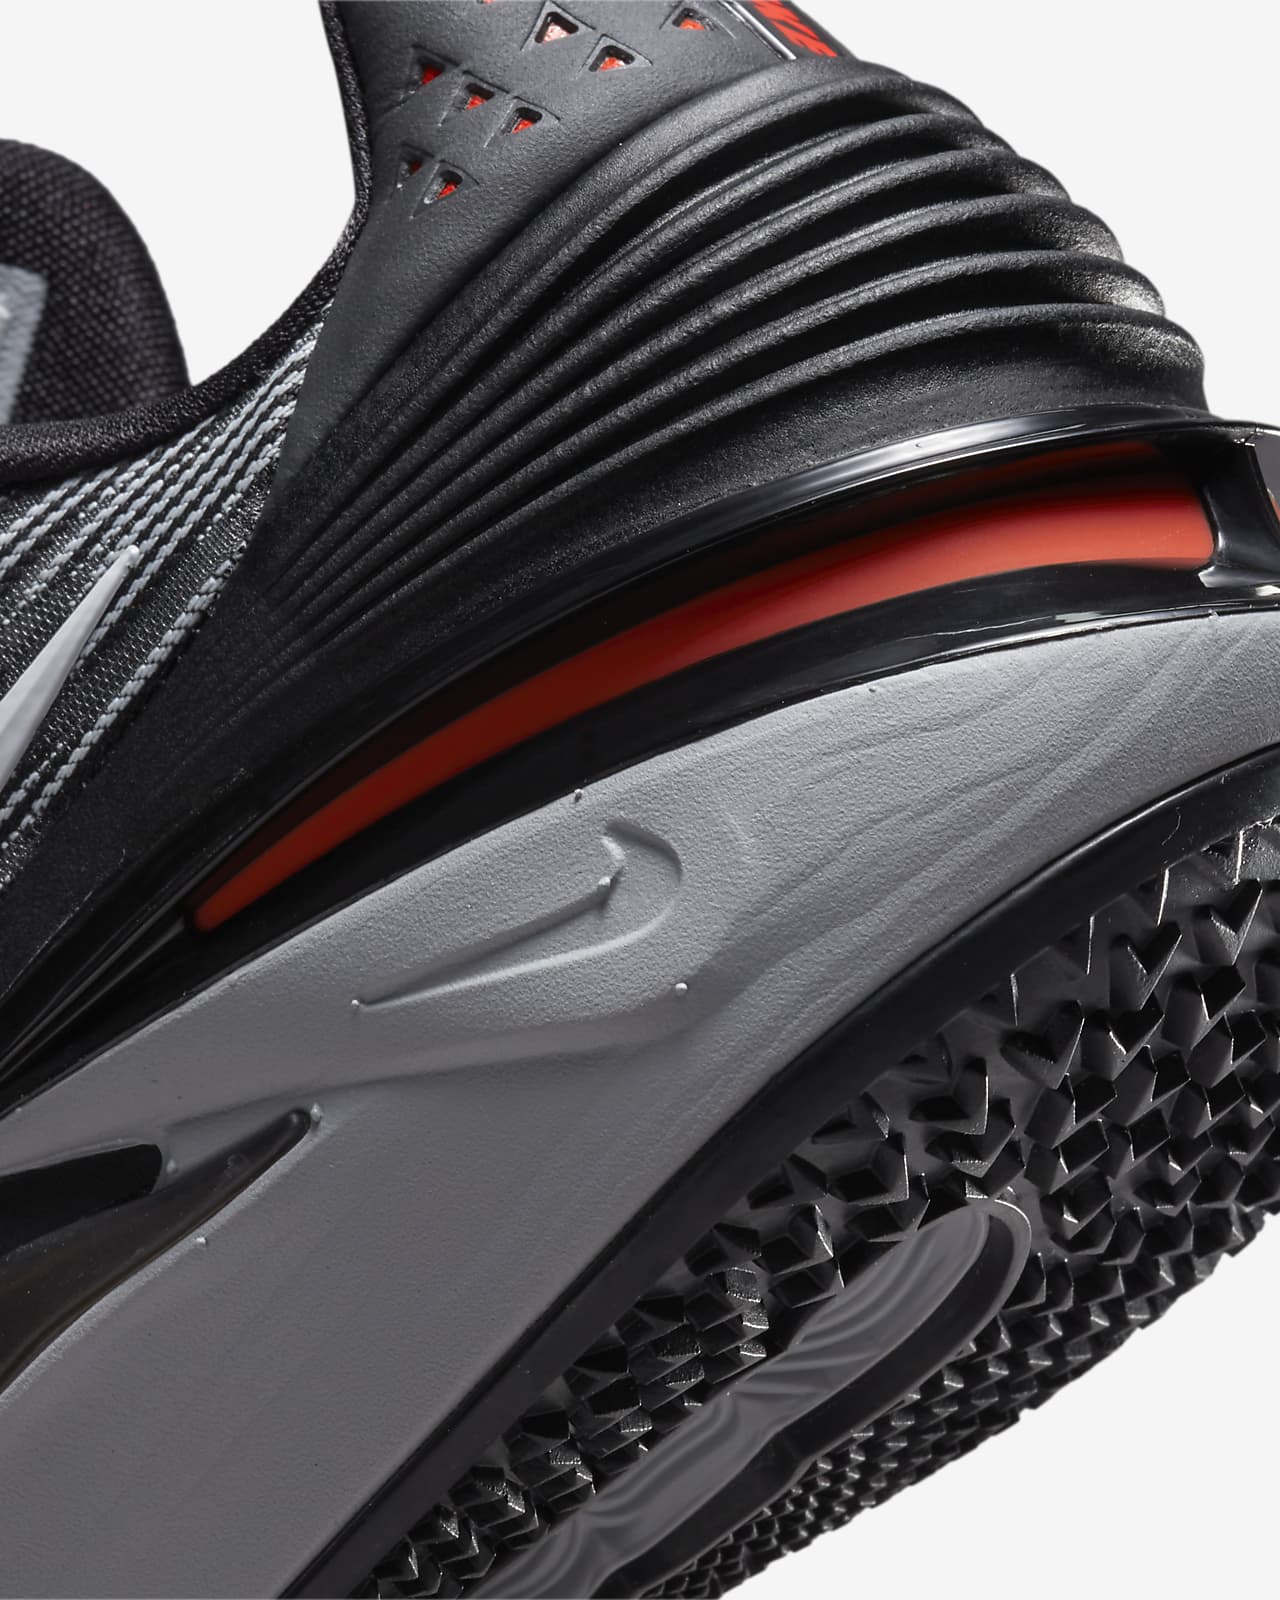 Buy Nike mens Sneaker, White/Multi-color-metallic Gol, 11.5 at